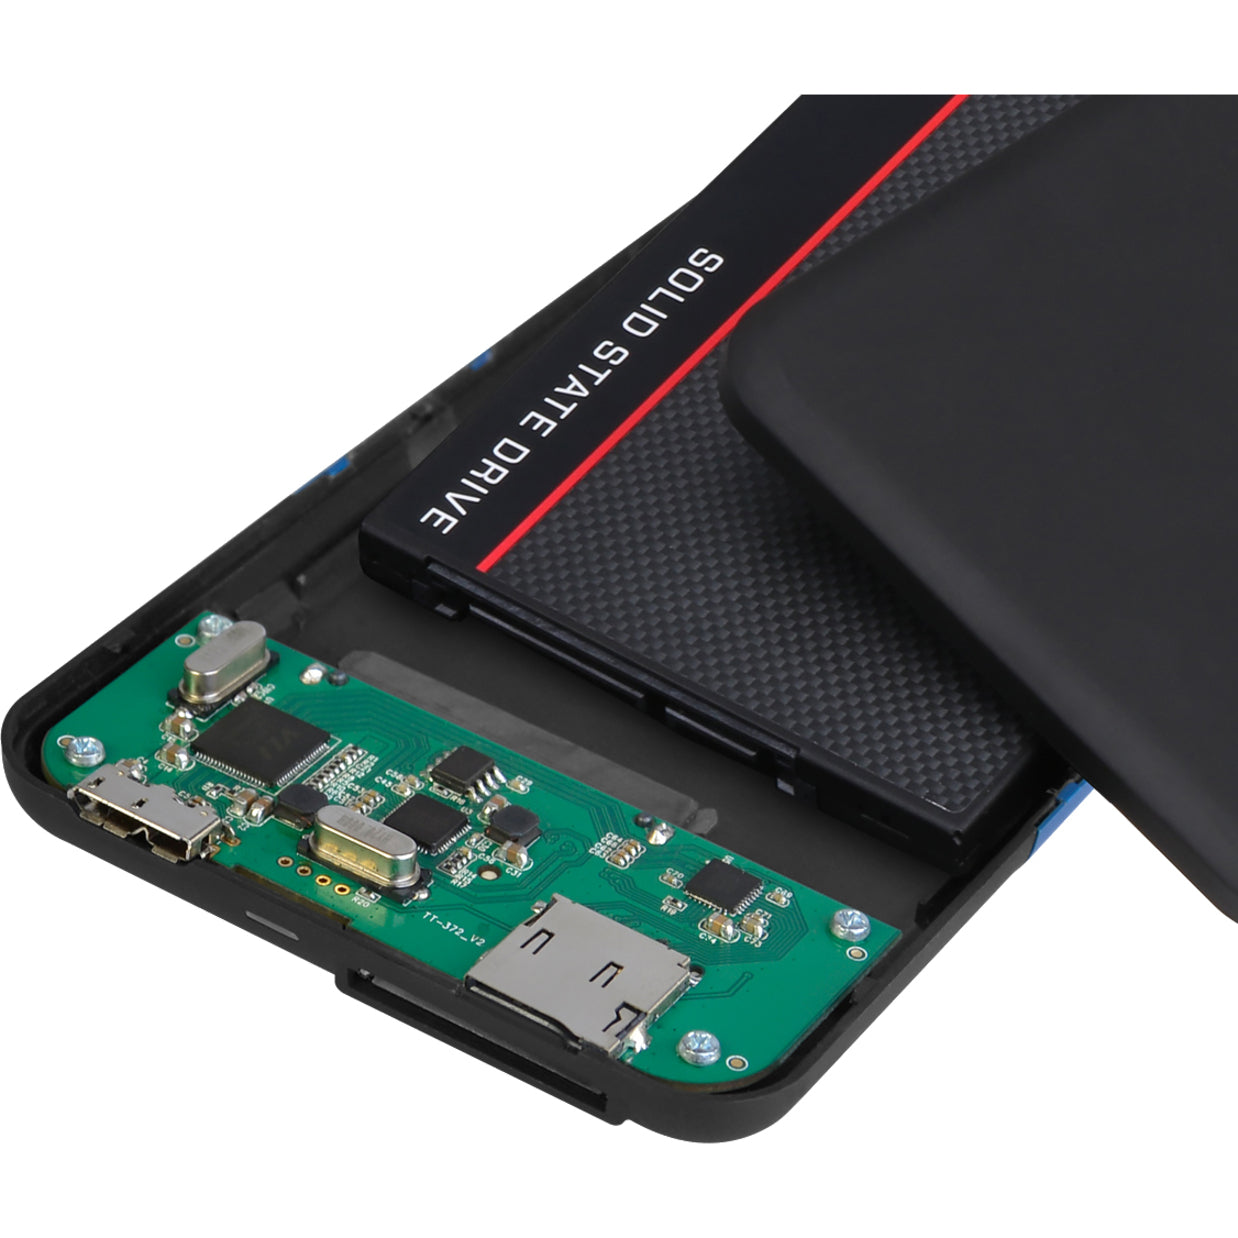 SIIG JU-SA0S12-S1 USB 3.0 to SATA Hard Drive with SD Reader Enclosure - 2.5", Adds More Storage Space